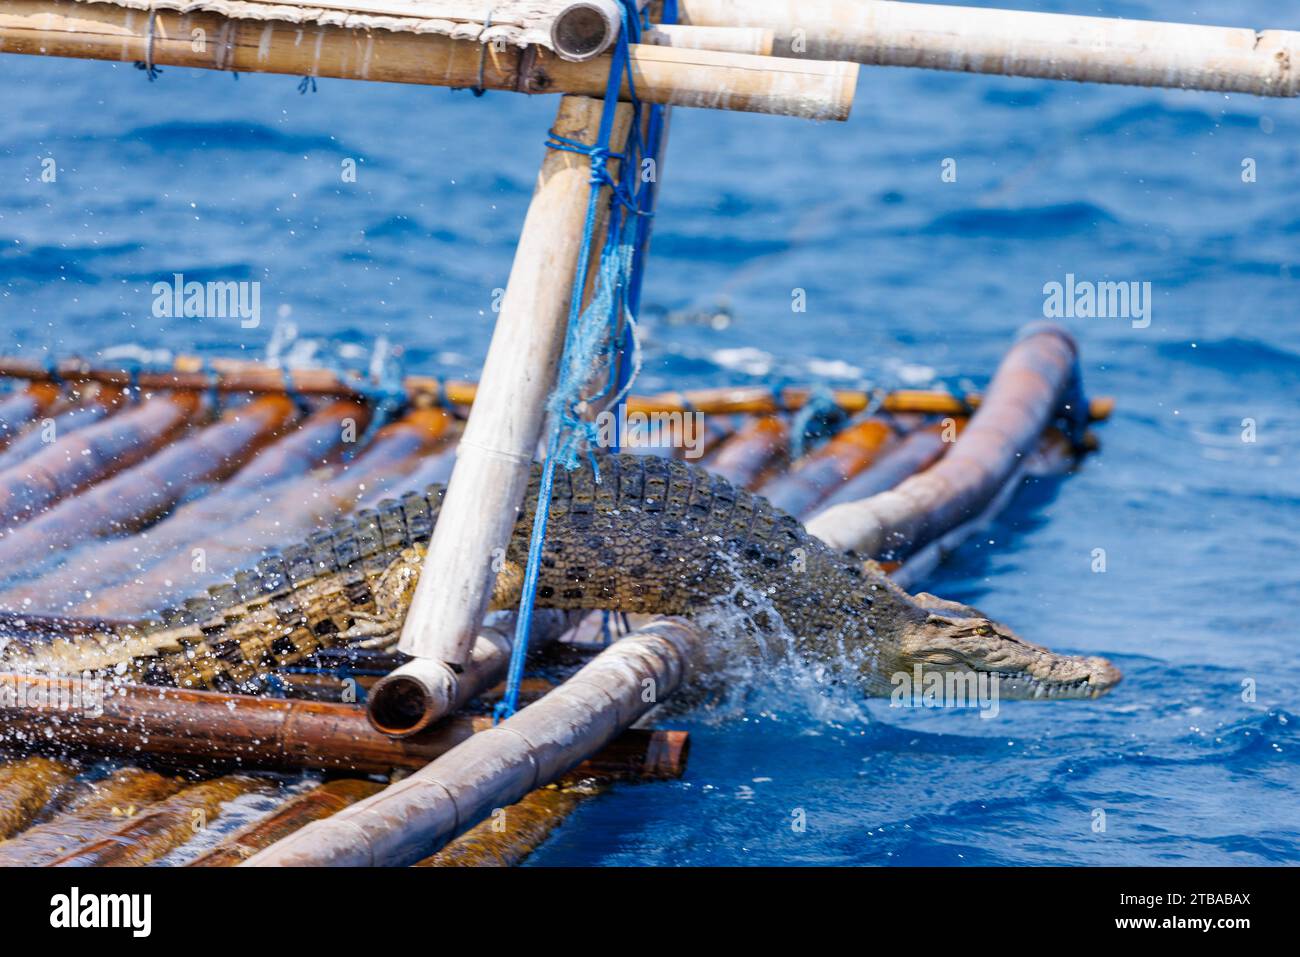 A salt water crocodile, Crocodylus porosus, jumps from a FAD or fish aggregating device, into the ocean a mile off the coast of, Baucau, The Democrati Stock Photo